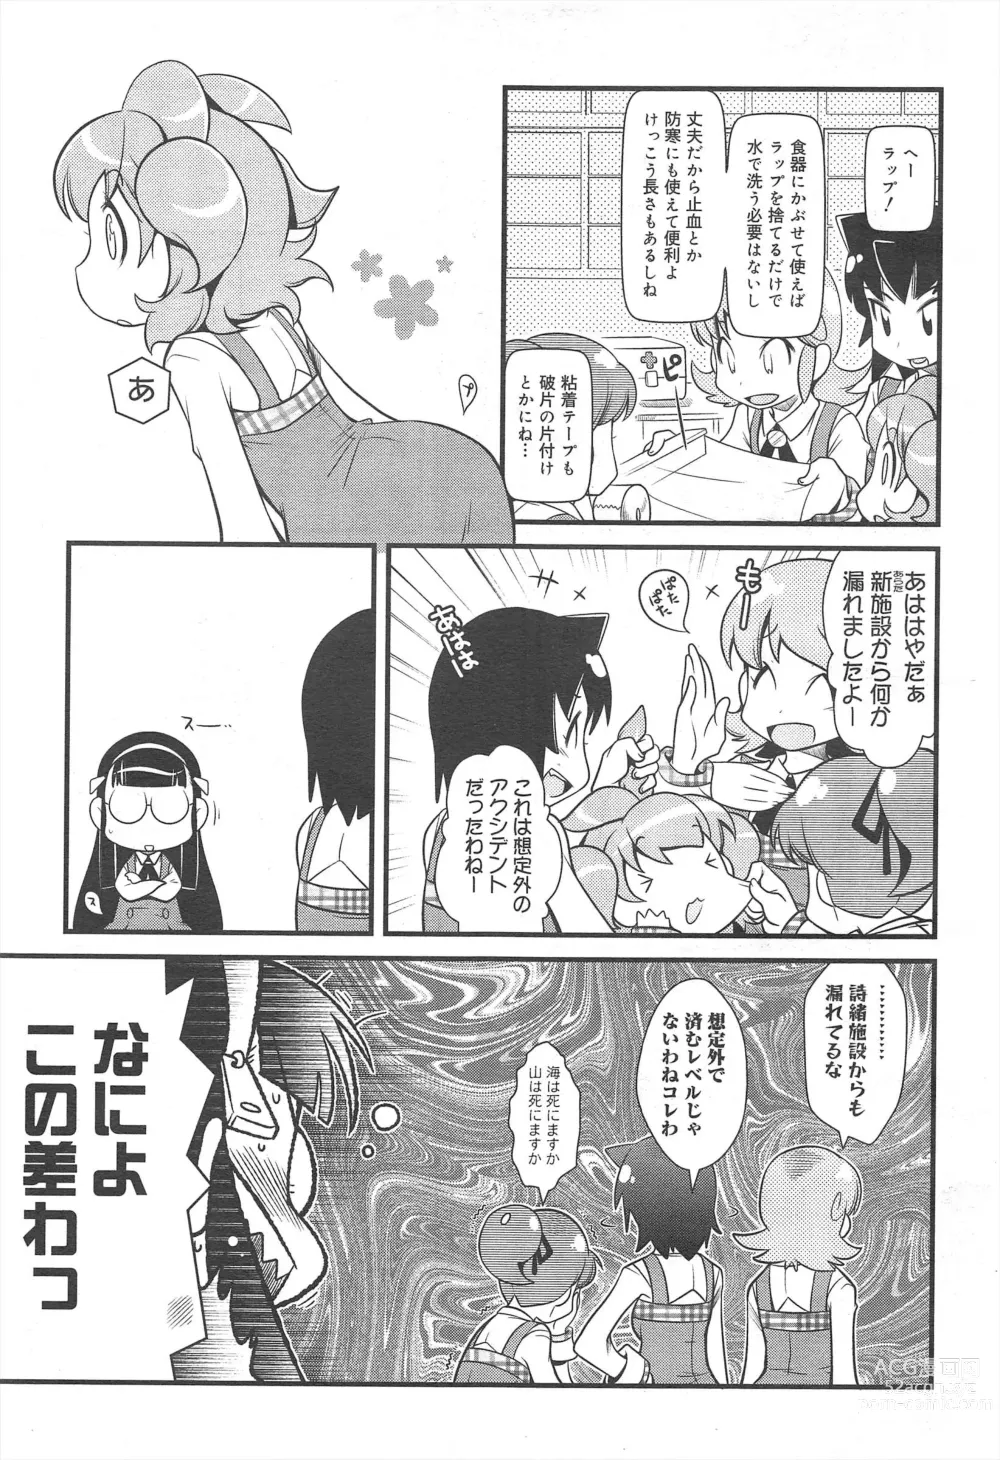 Page 387 of manga COMIC Megamilk 2011-06 Vol.12